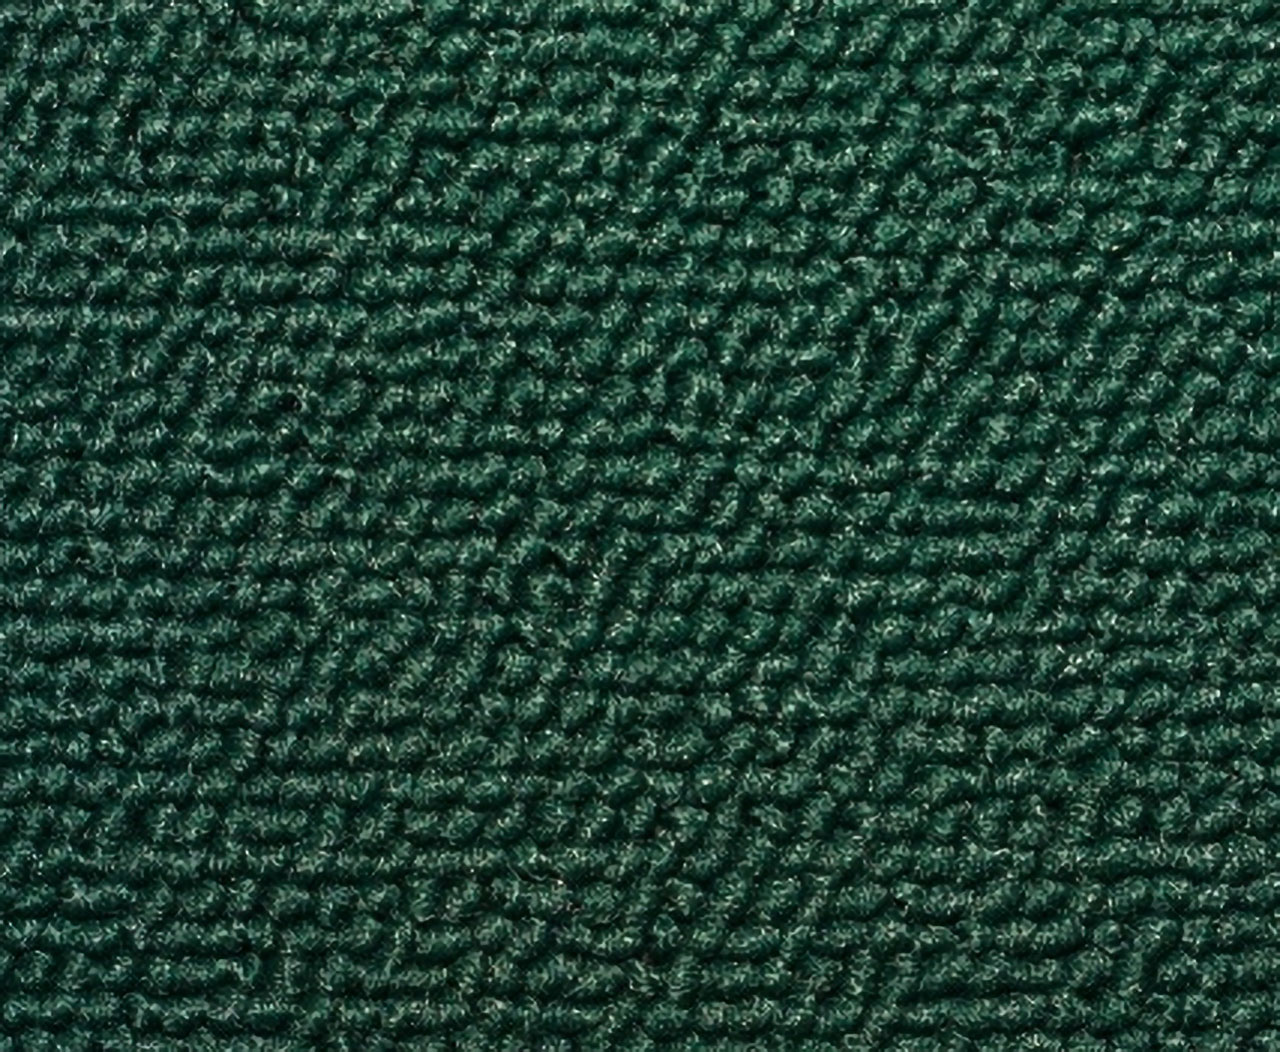 Holden Standard EH Standard Panel Van C51 Triton Green Carpet (Image 1 of 1)